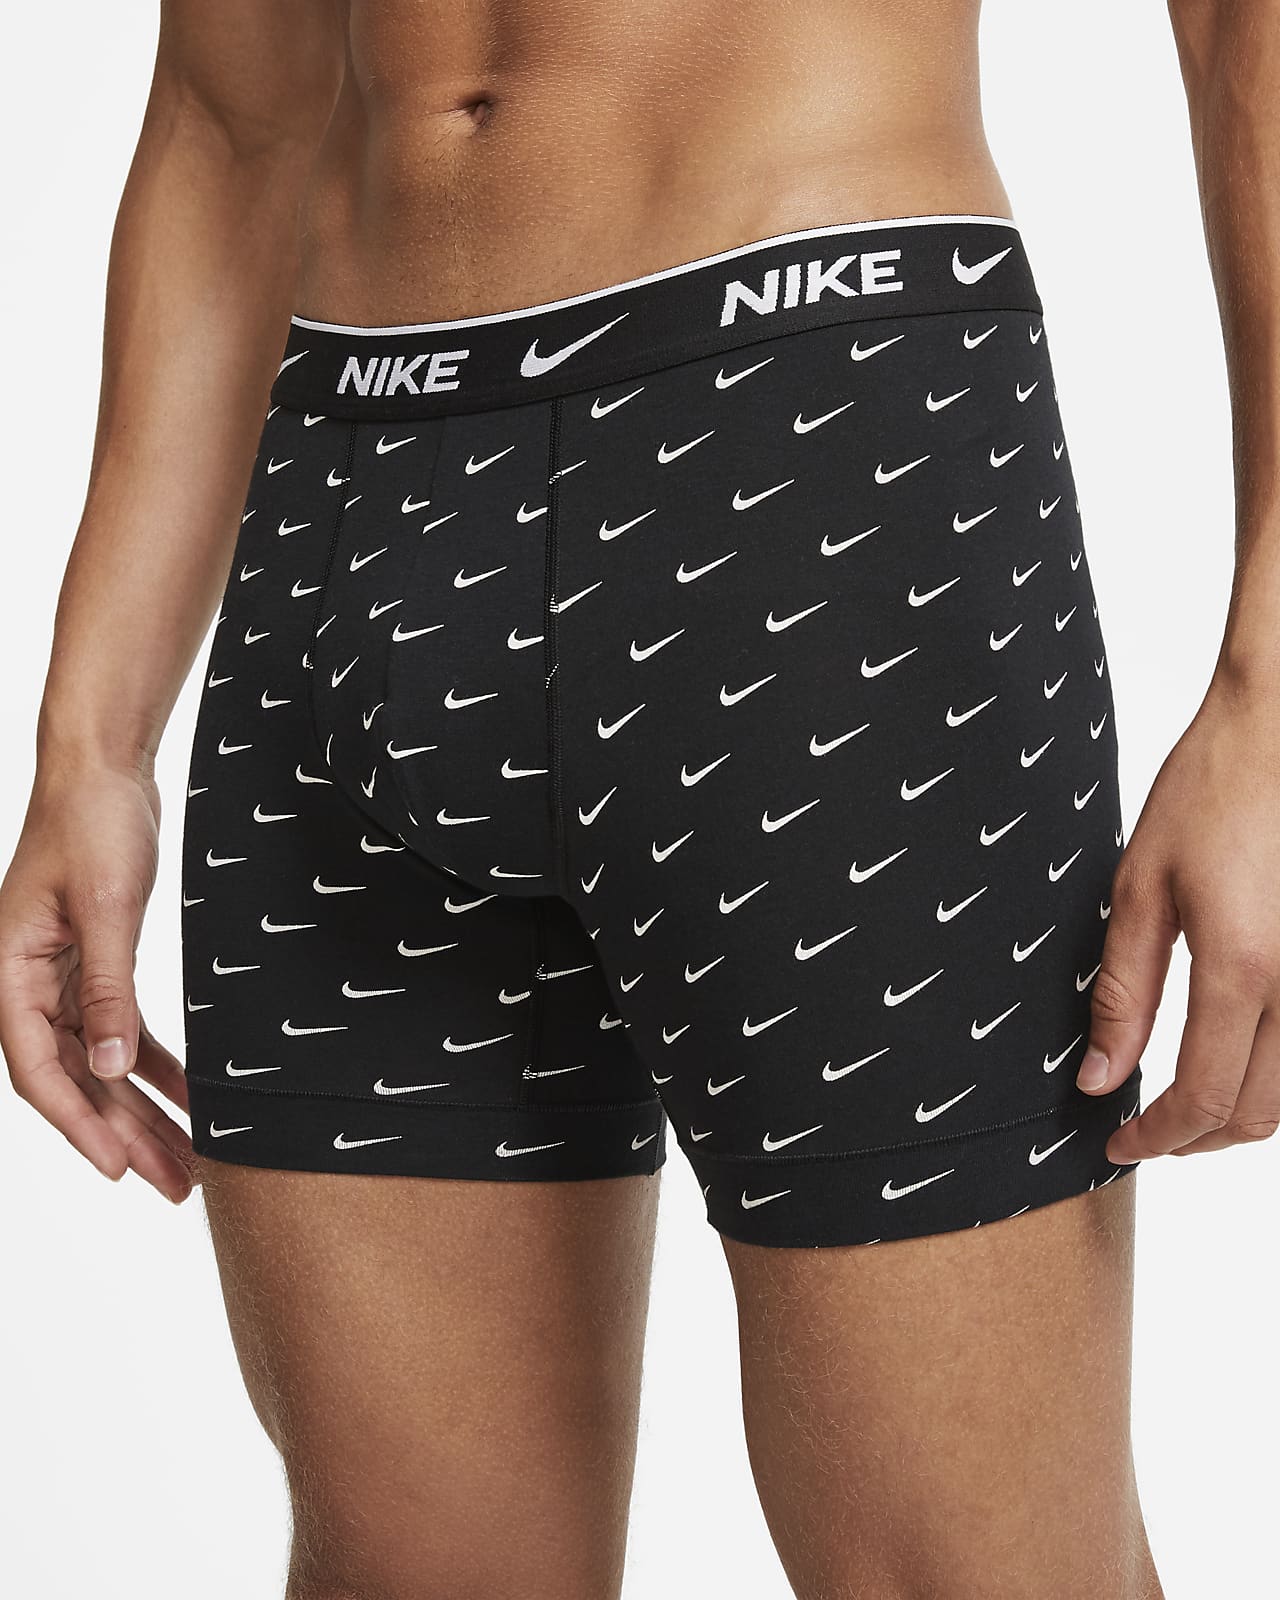 nike sports underwear mens